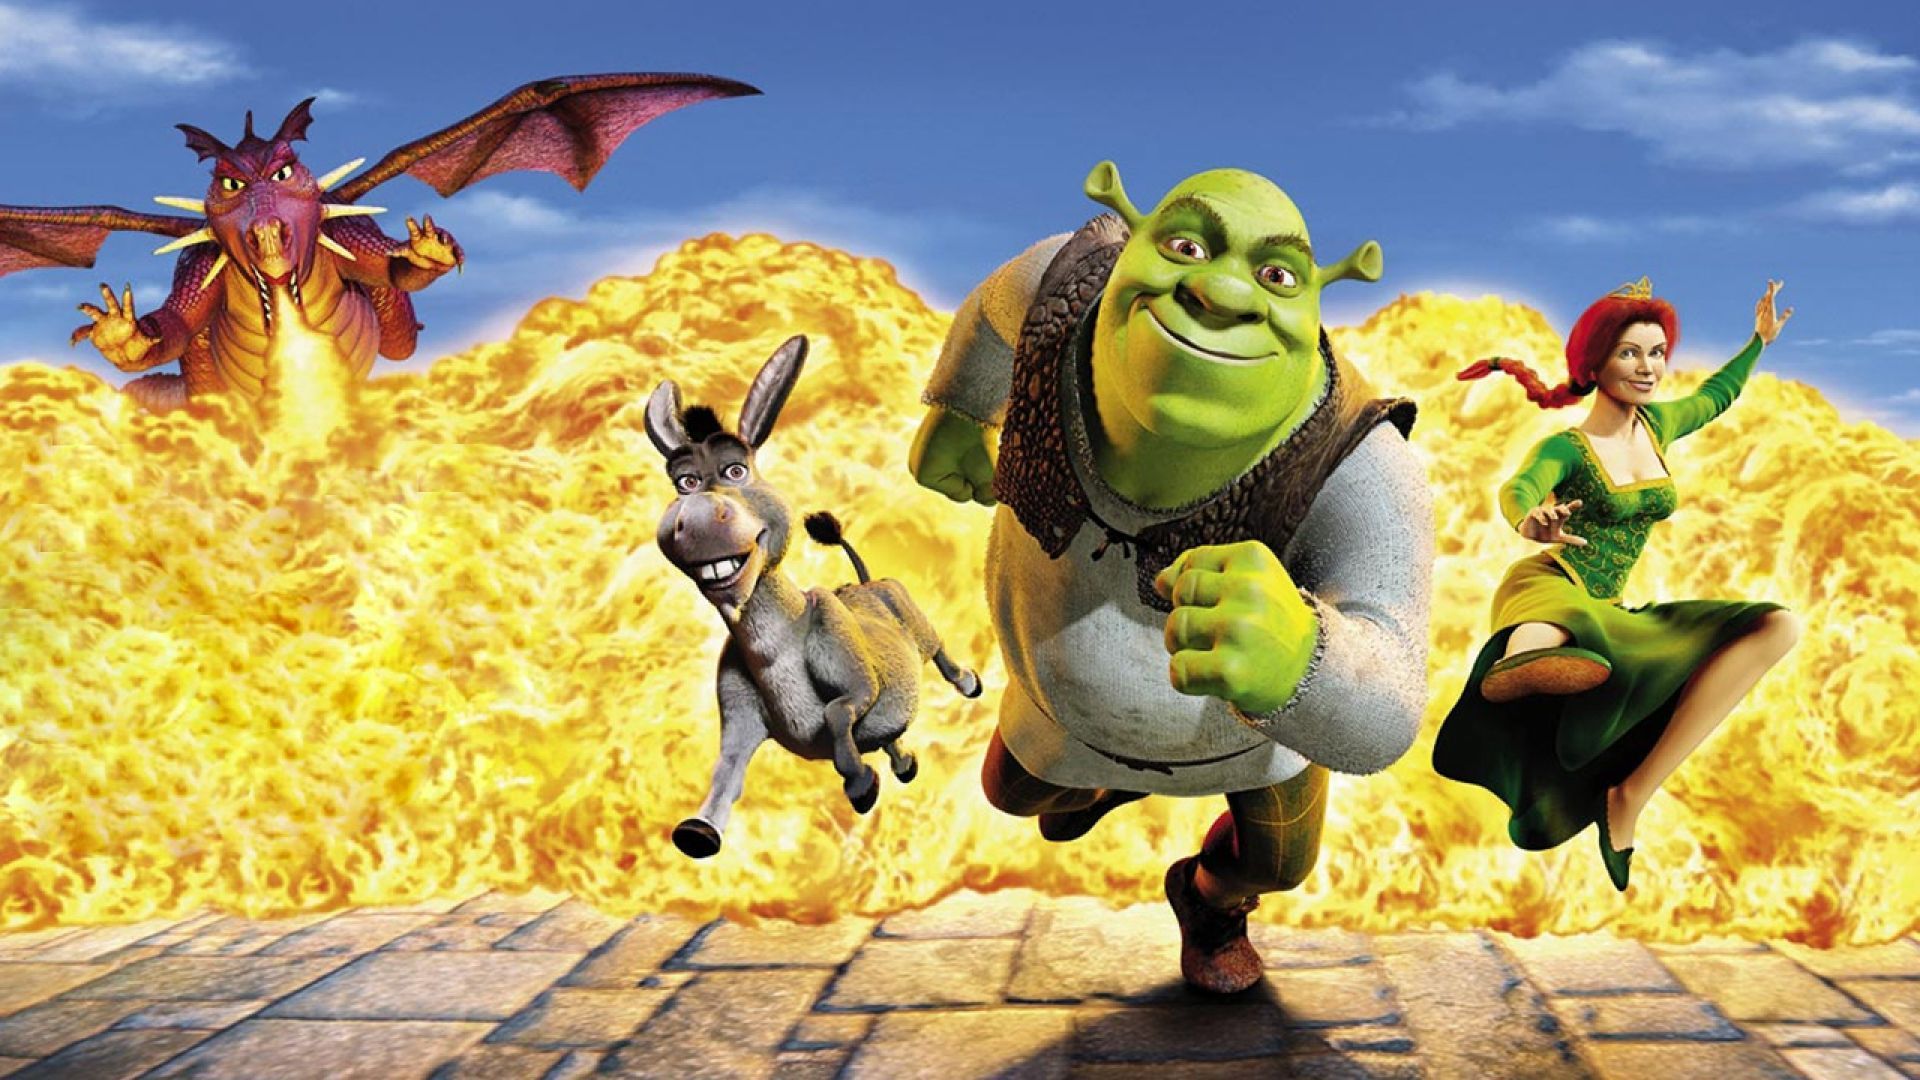 Постеры к фильму "Шрэк" /Shrek/ (2001). 